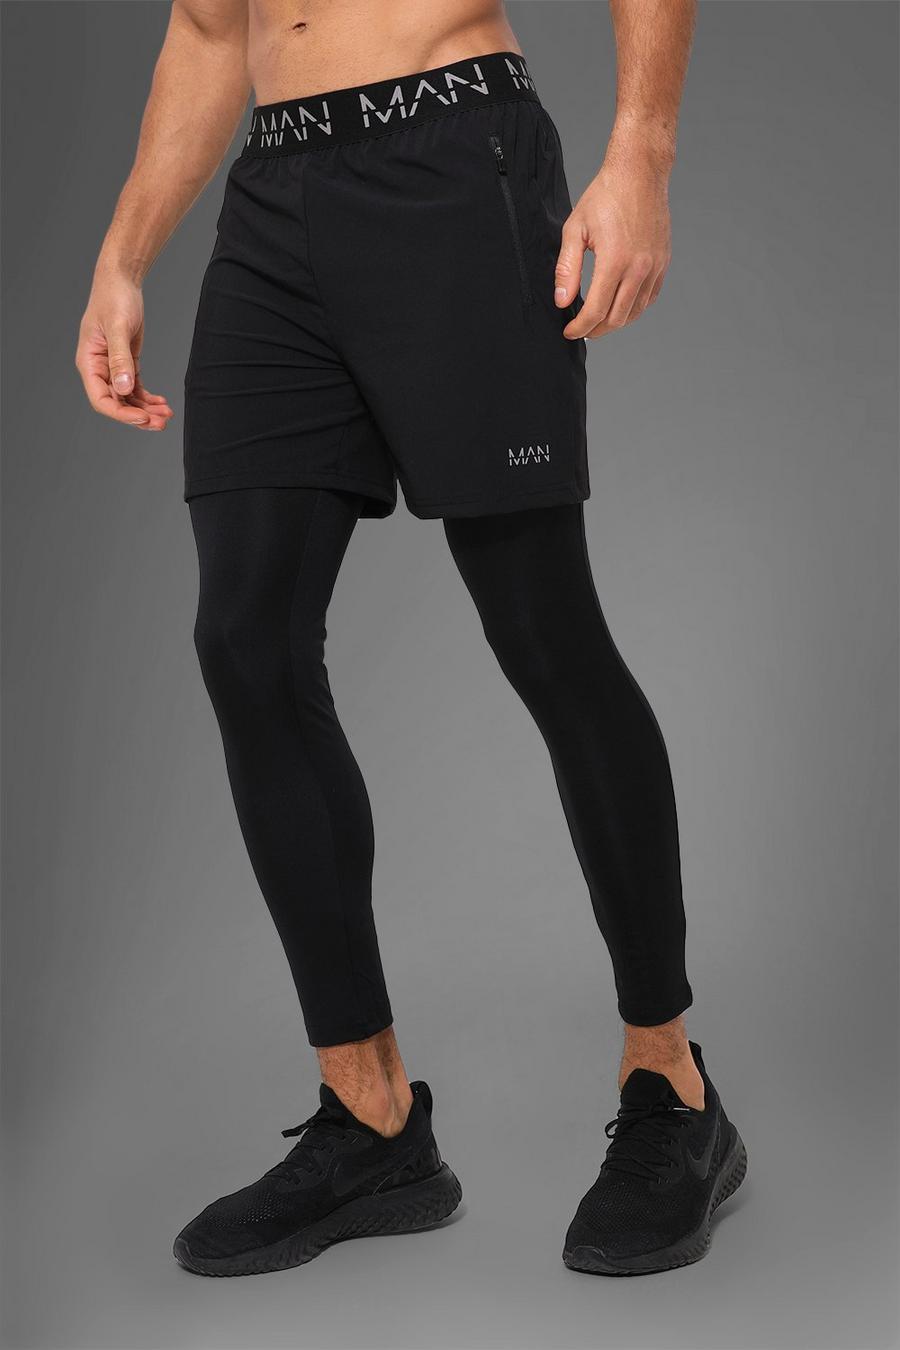 Black schwarz Man Active Gym 2-In-1 Legging Shorts